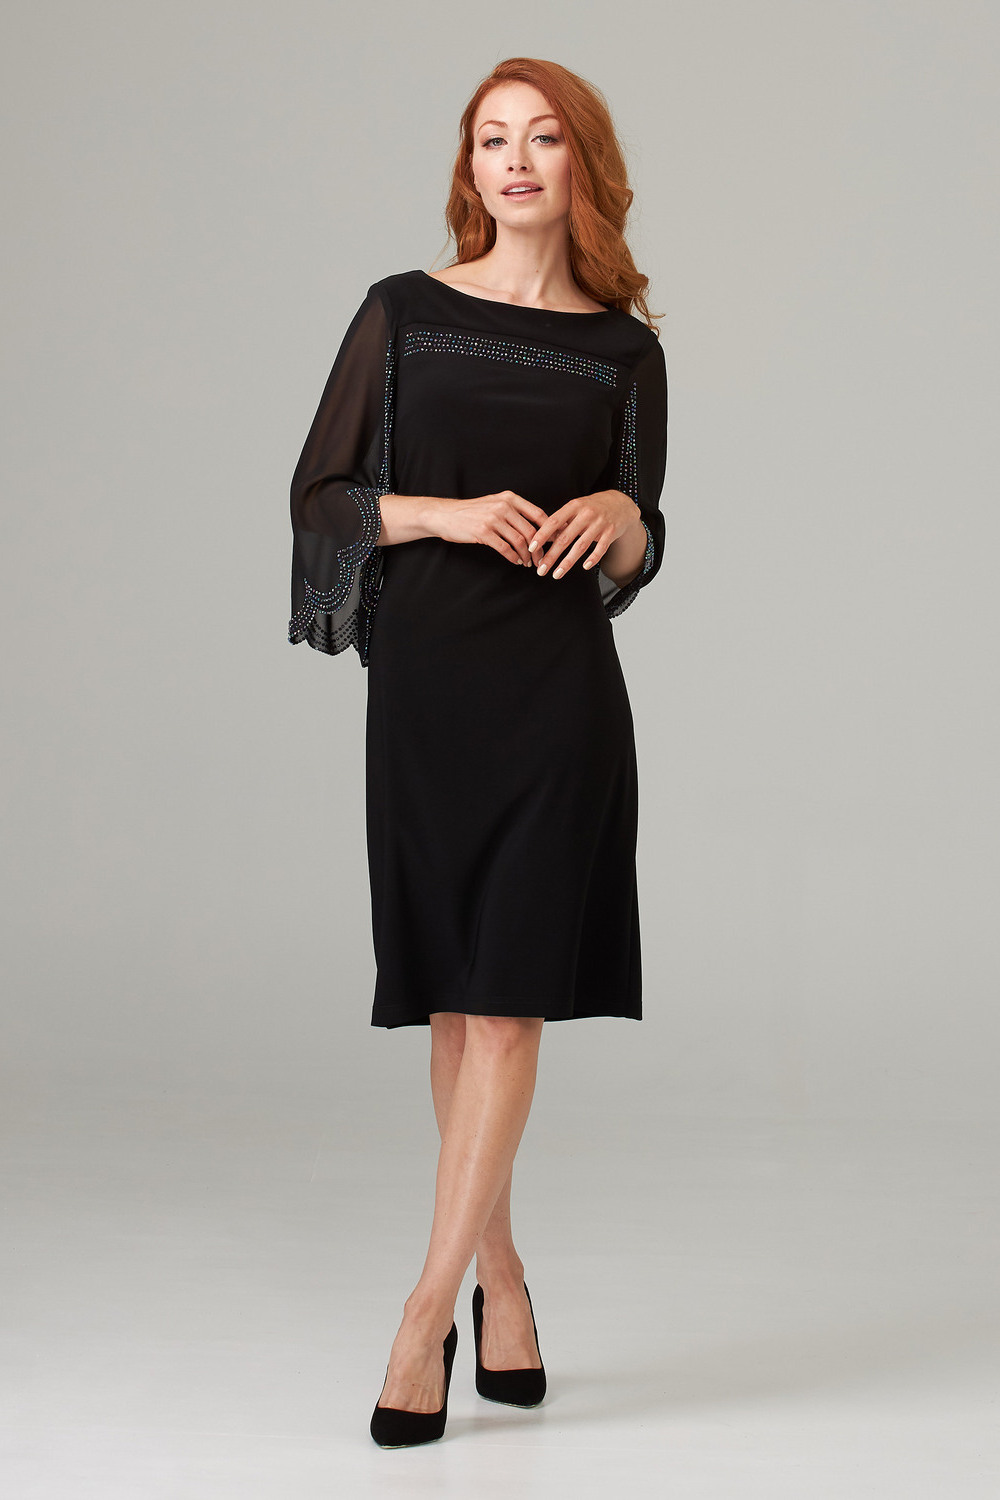 Joseph Ribkoff Dress Style 202266. Black